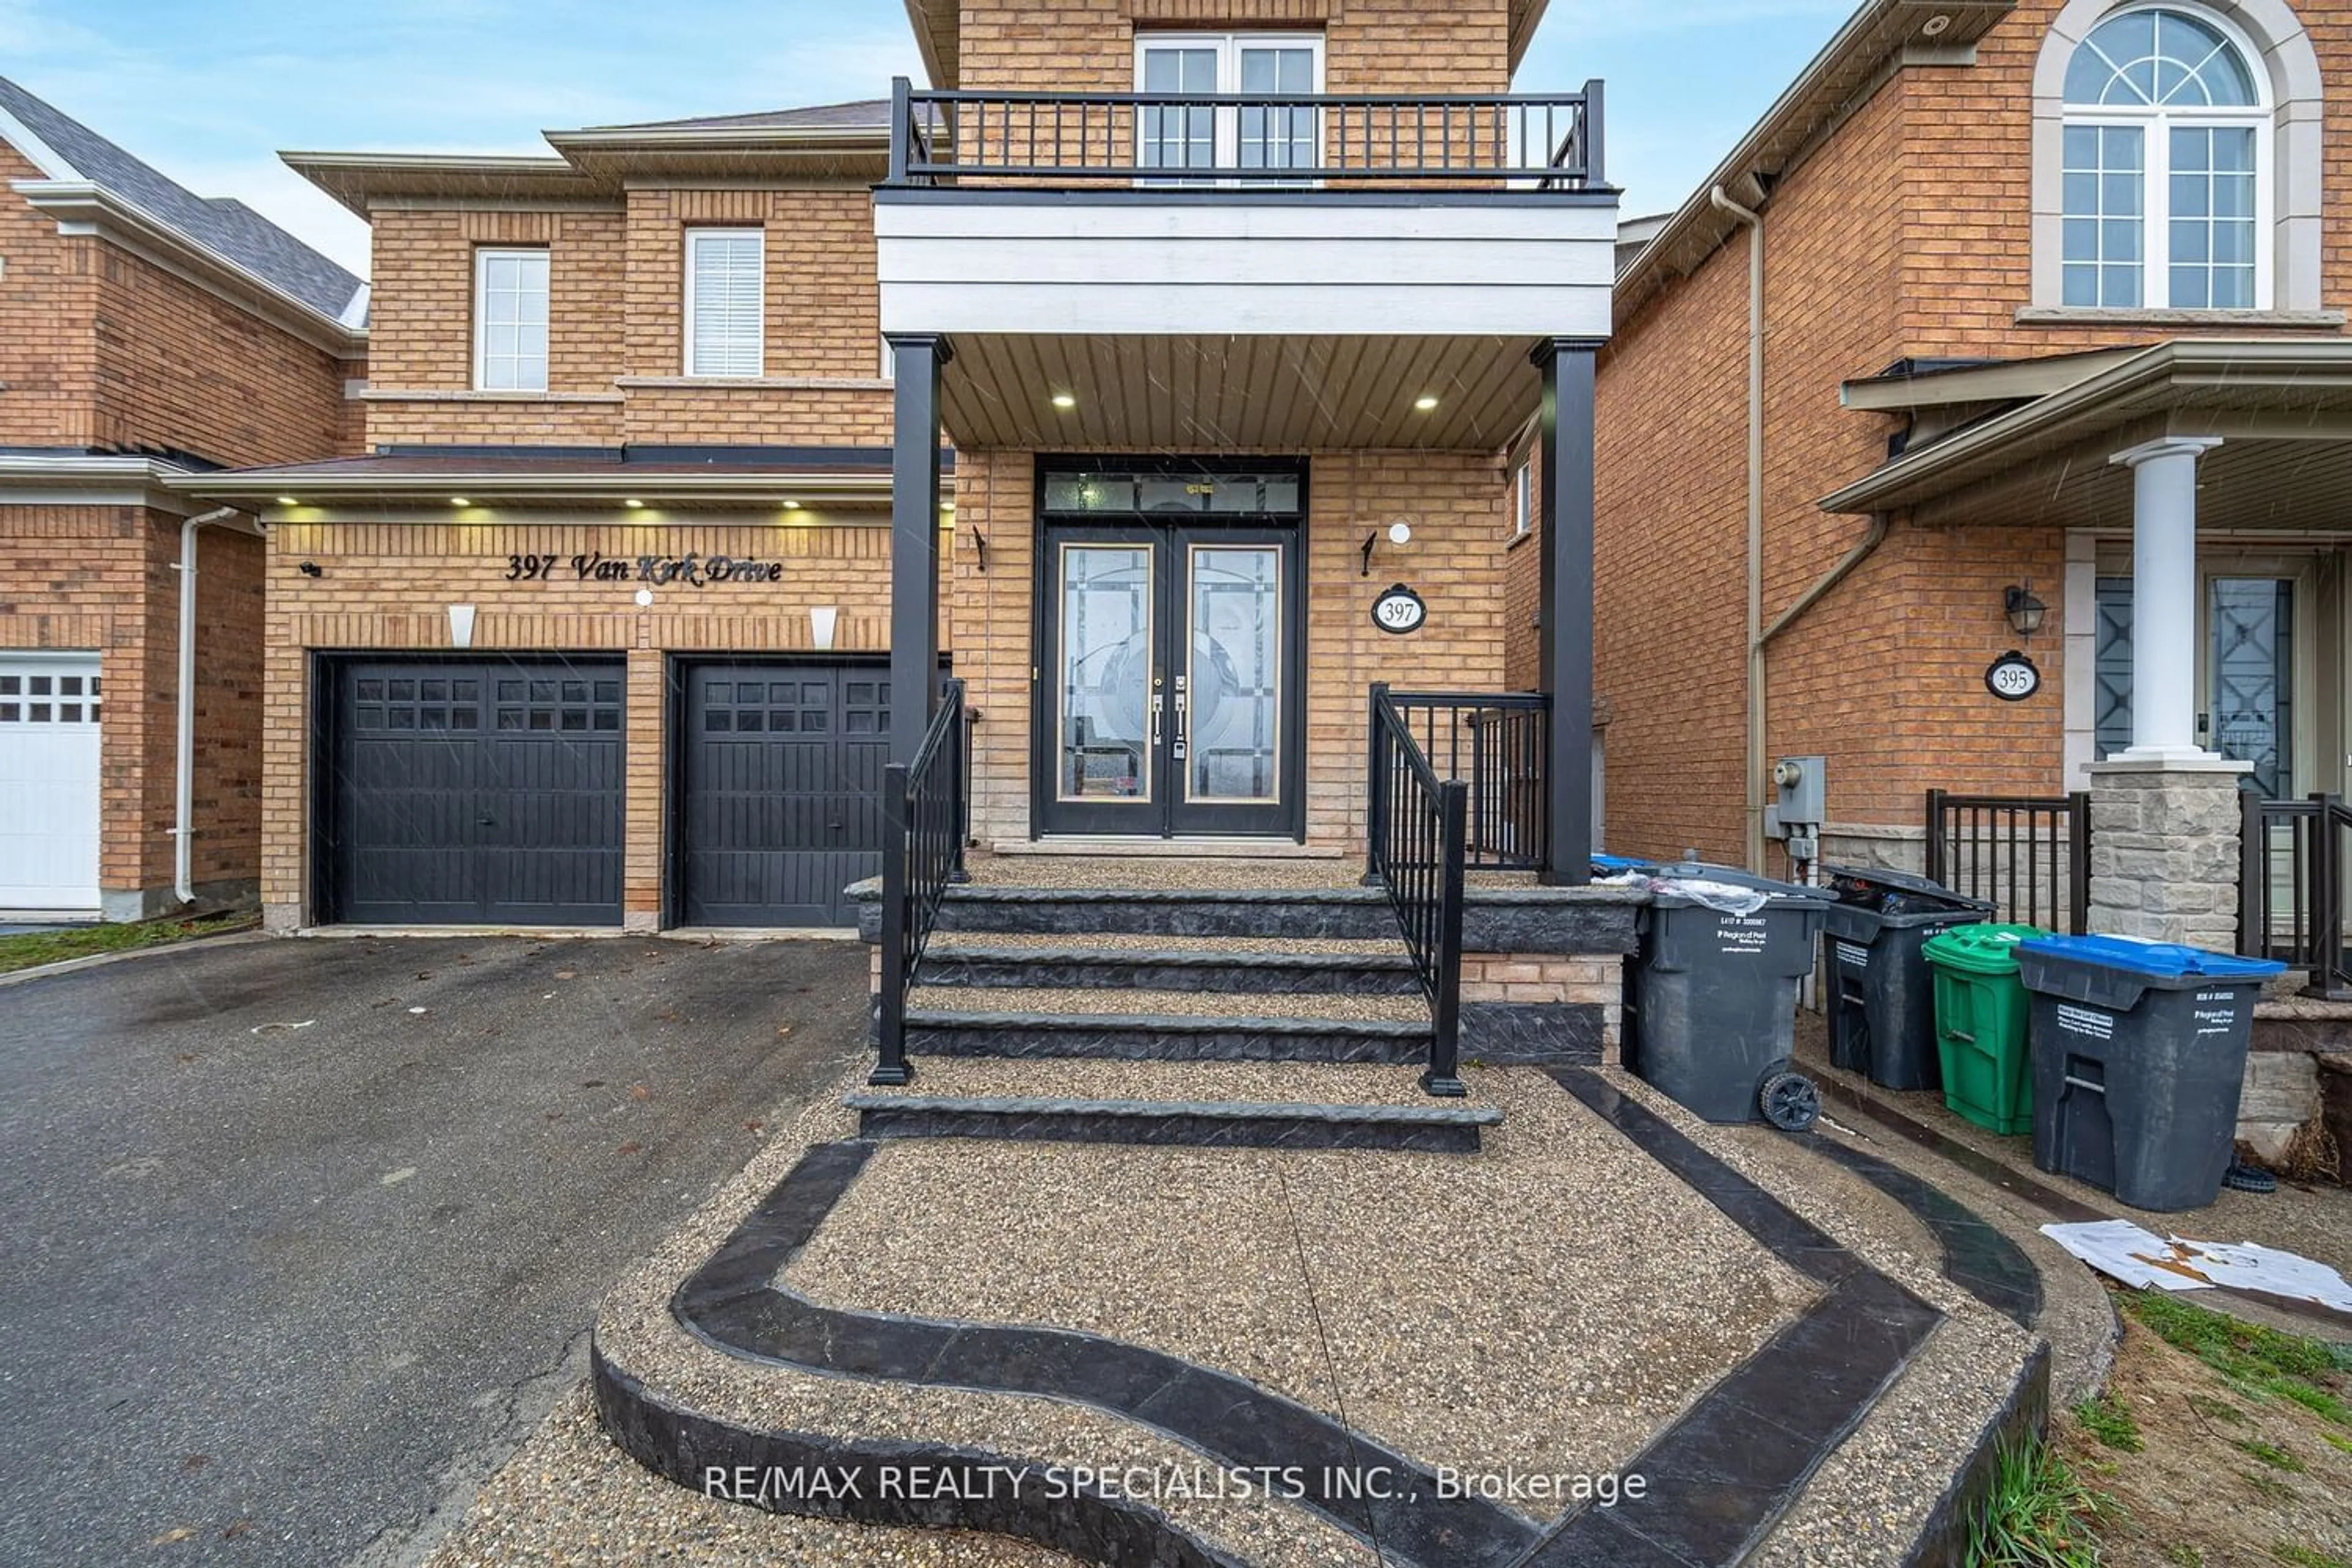 Home with brick exterior material for 397 Van Kirk Dr, Brampton Ontario L7A 3V5